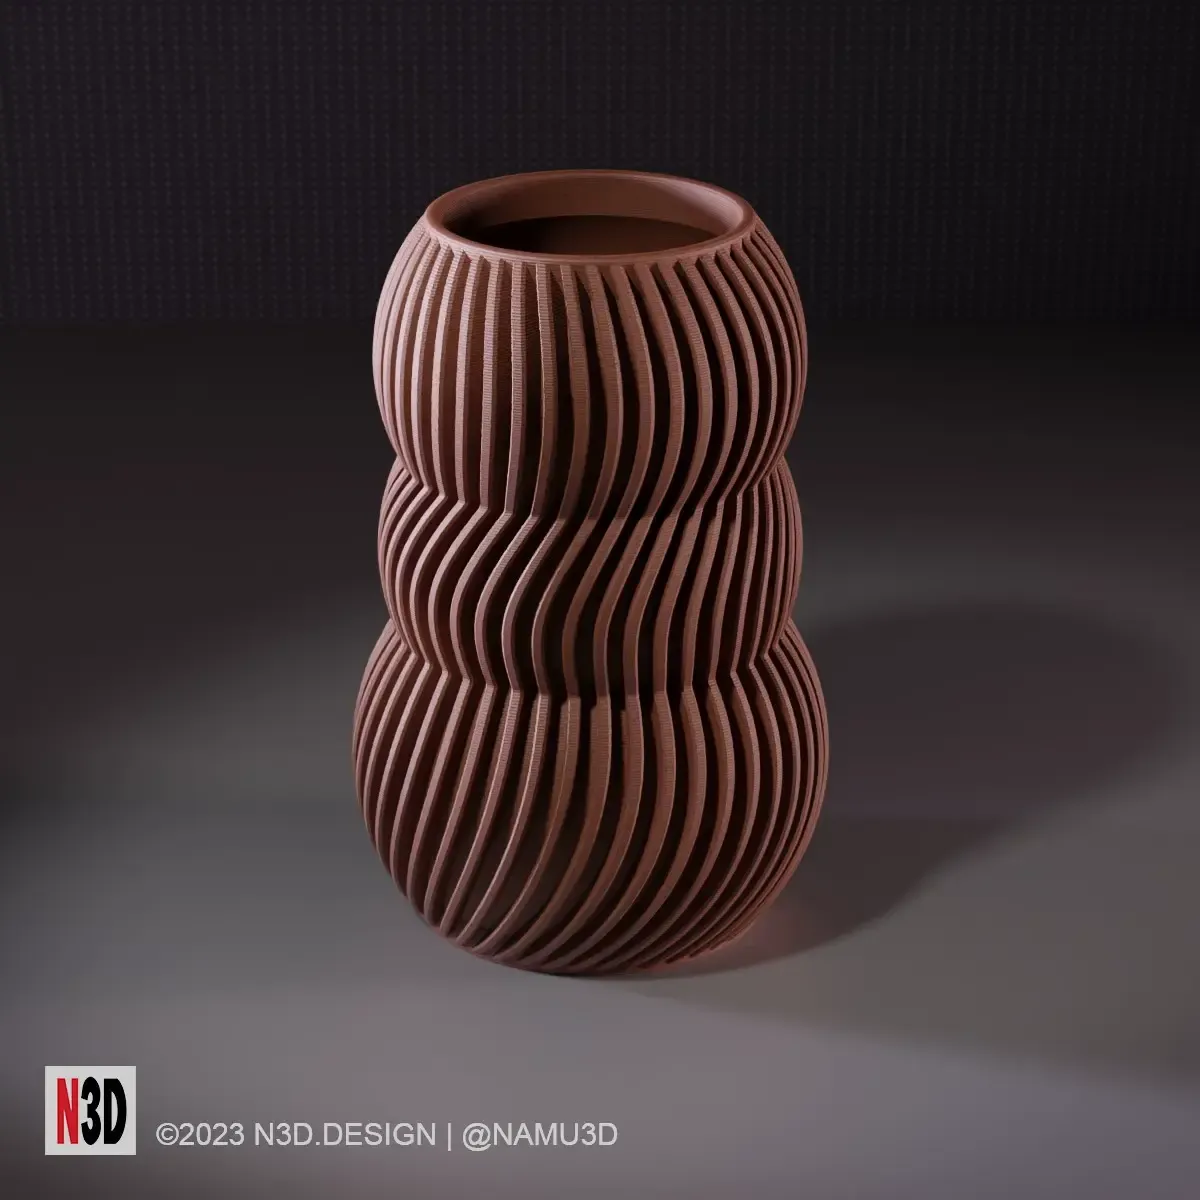 Vase 0003 - Stripped bubbles vase